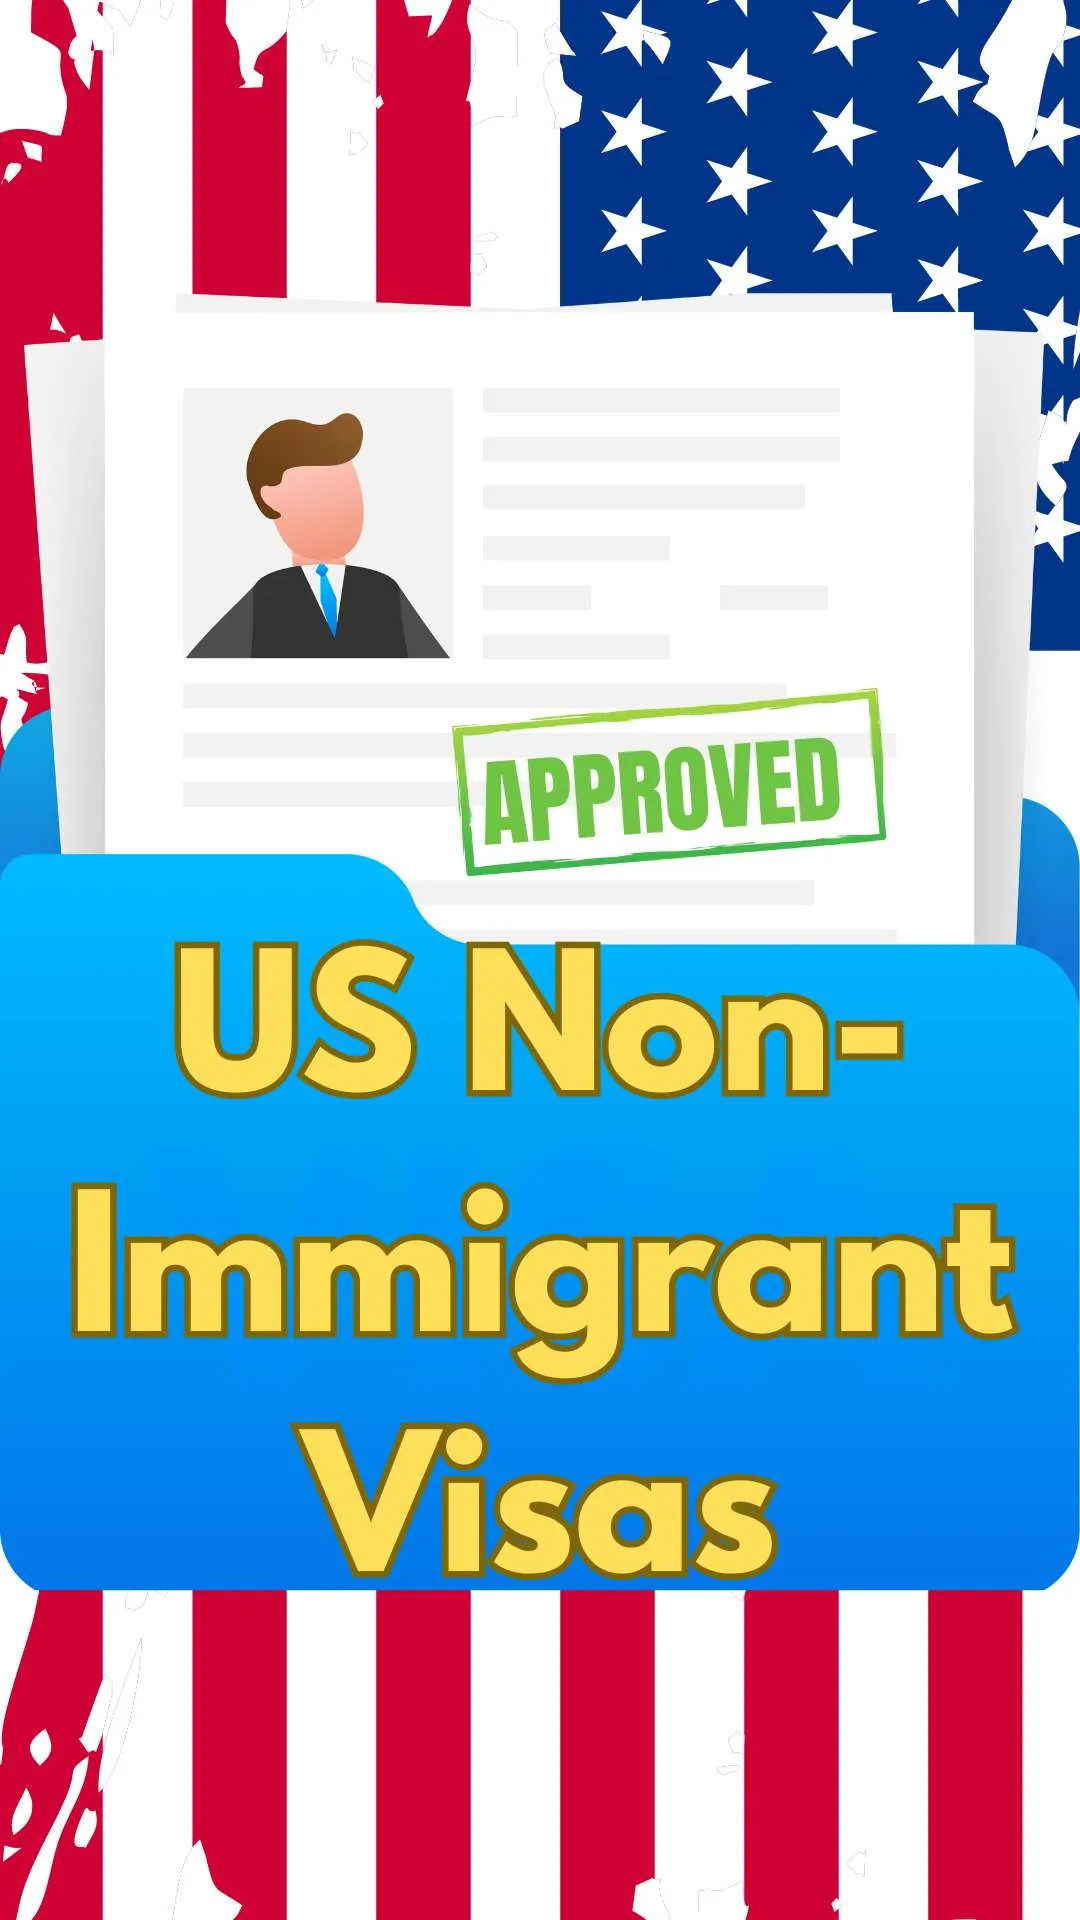 US Non-Immigrant Visas